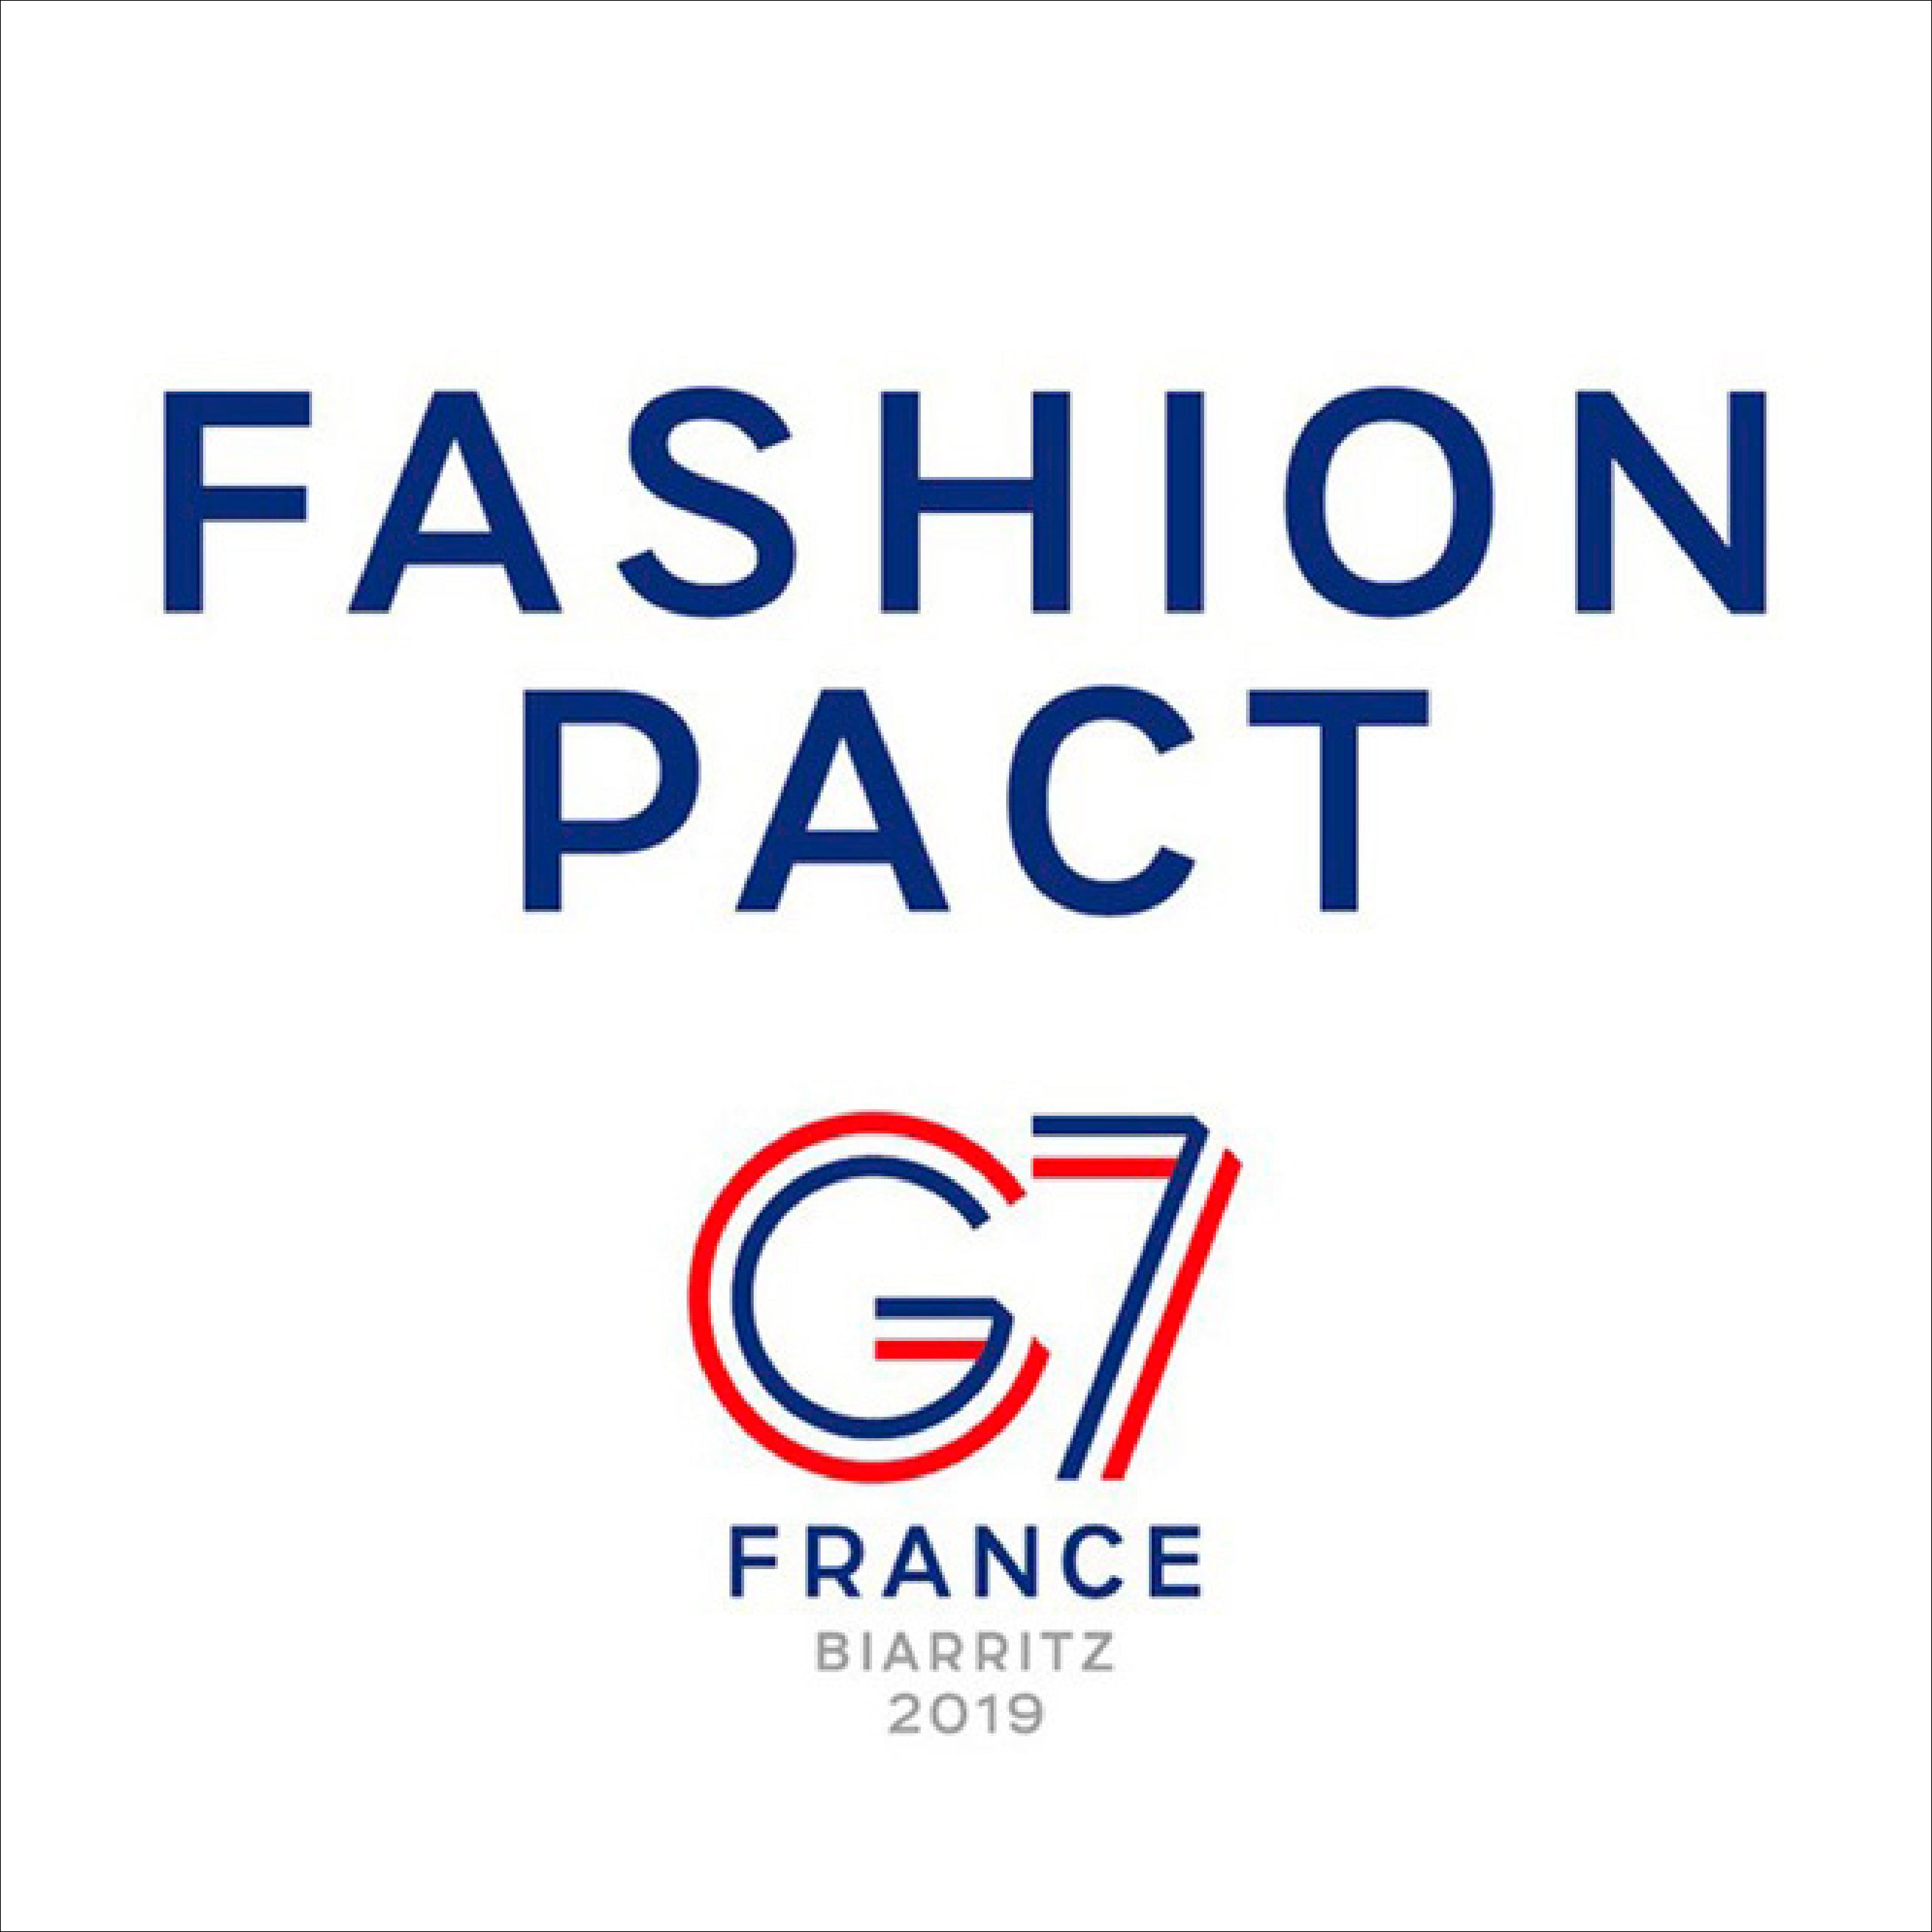 G7 Fashion Pact